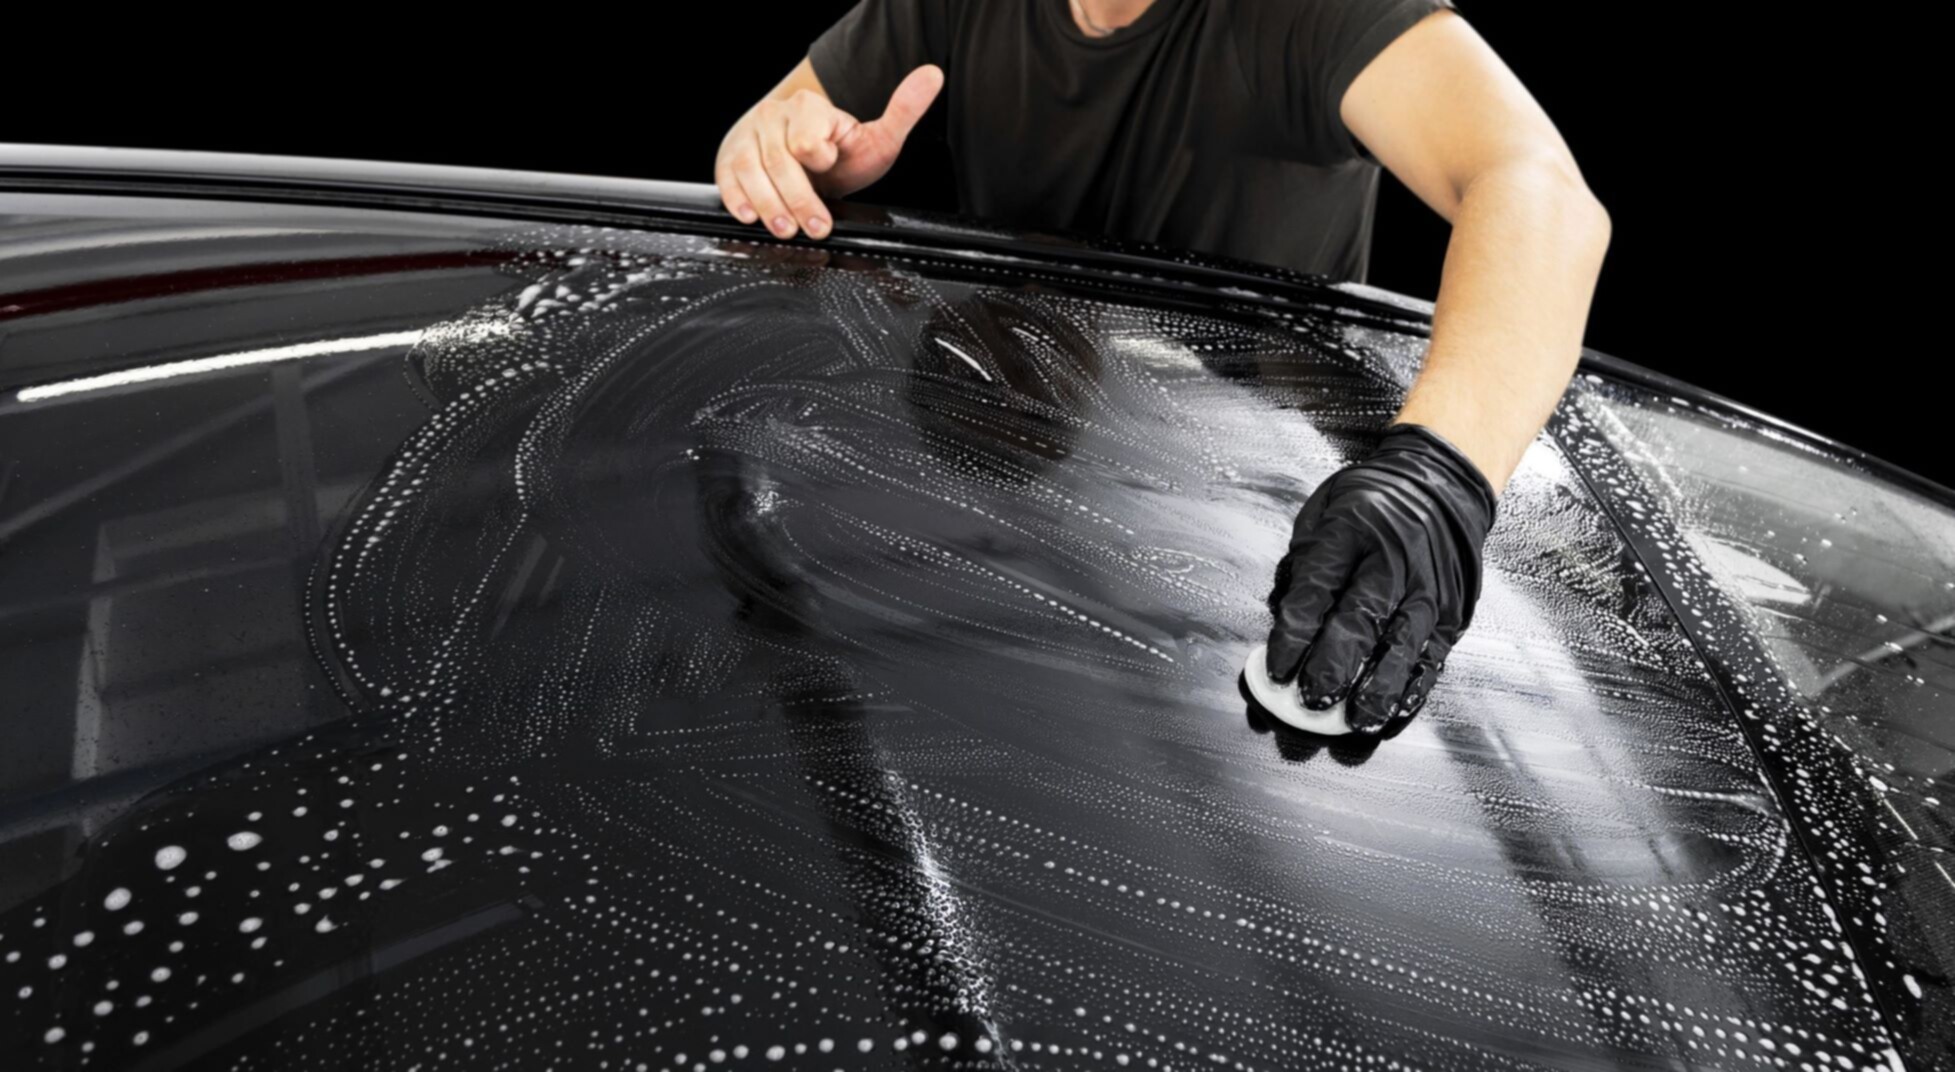 Auto Detailing  Super Star Car Wash